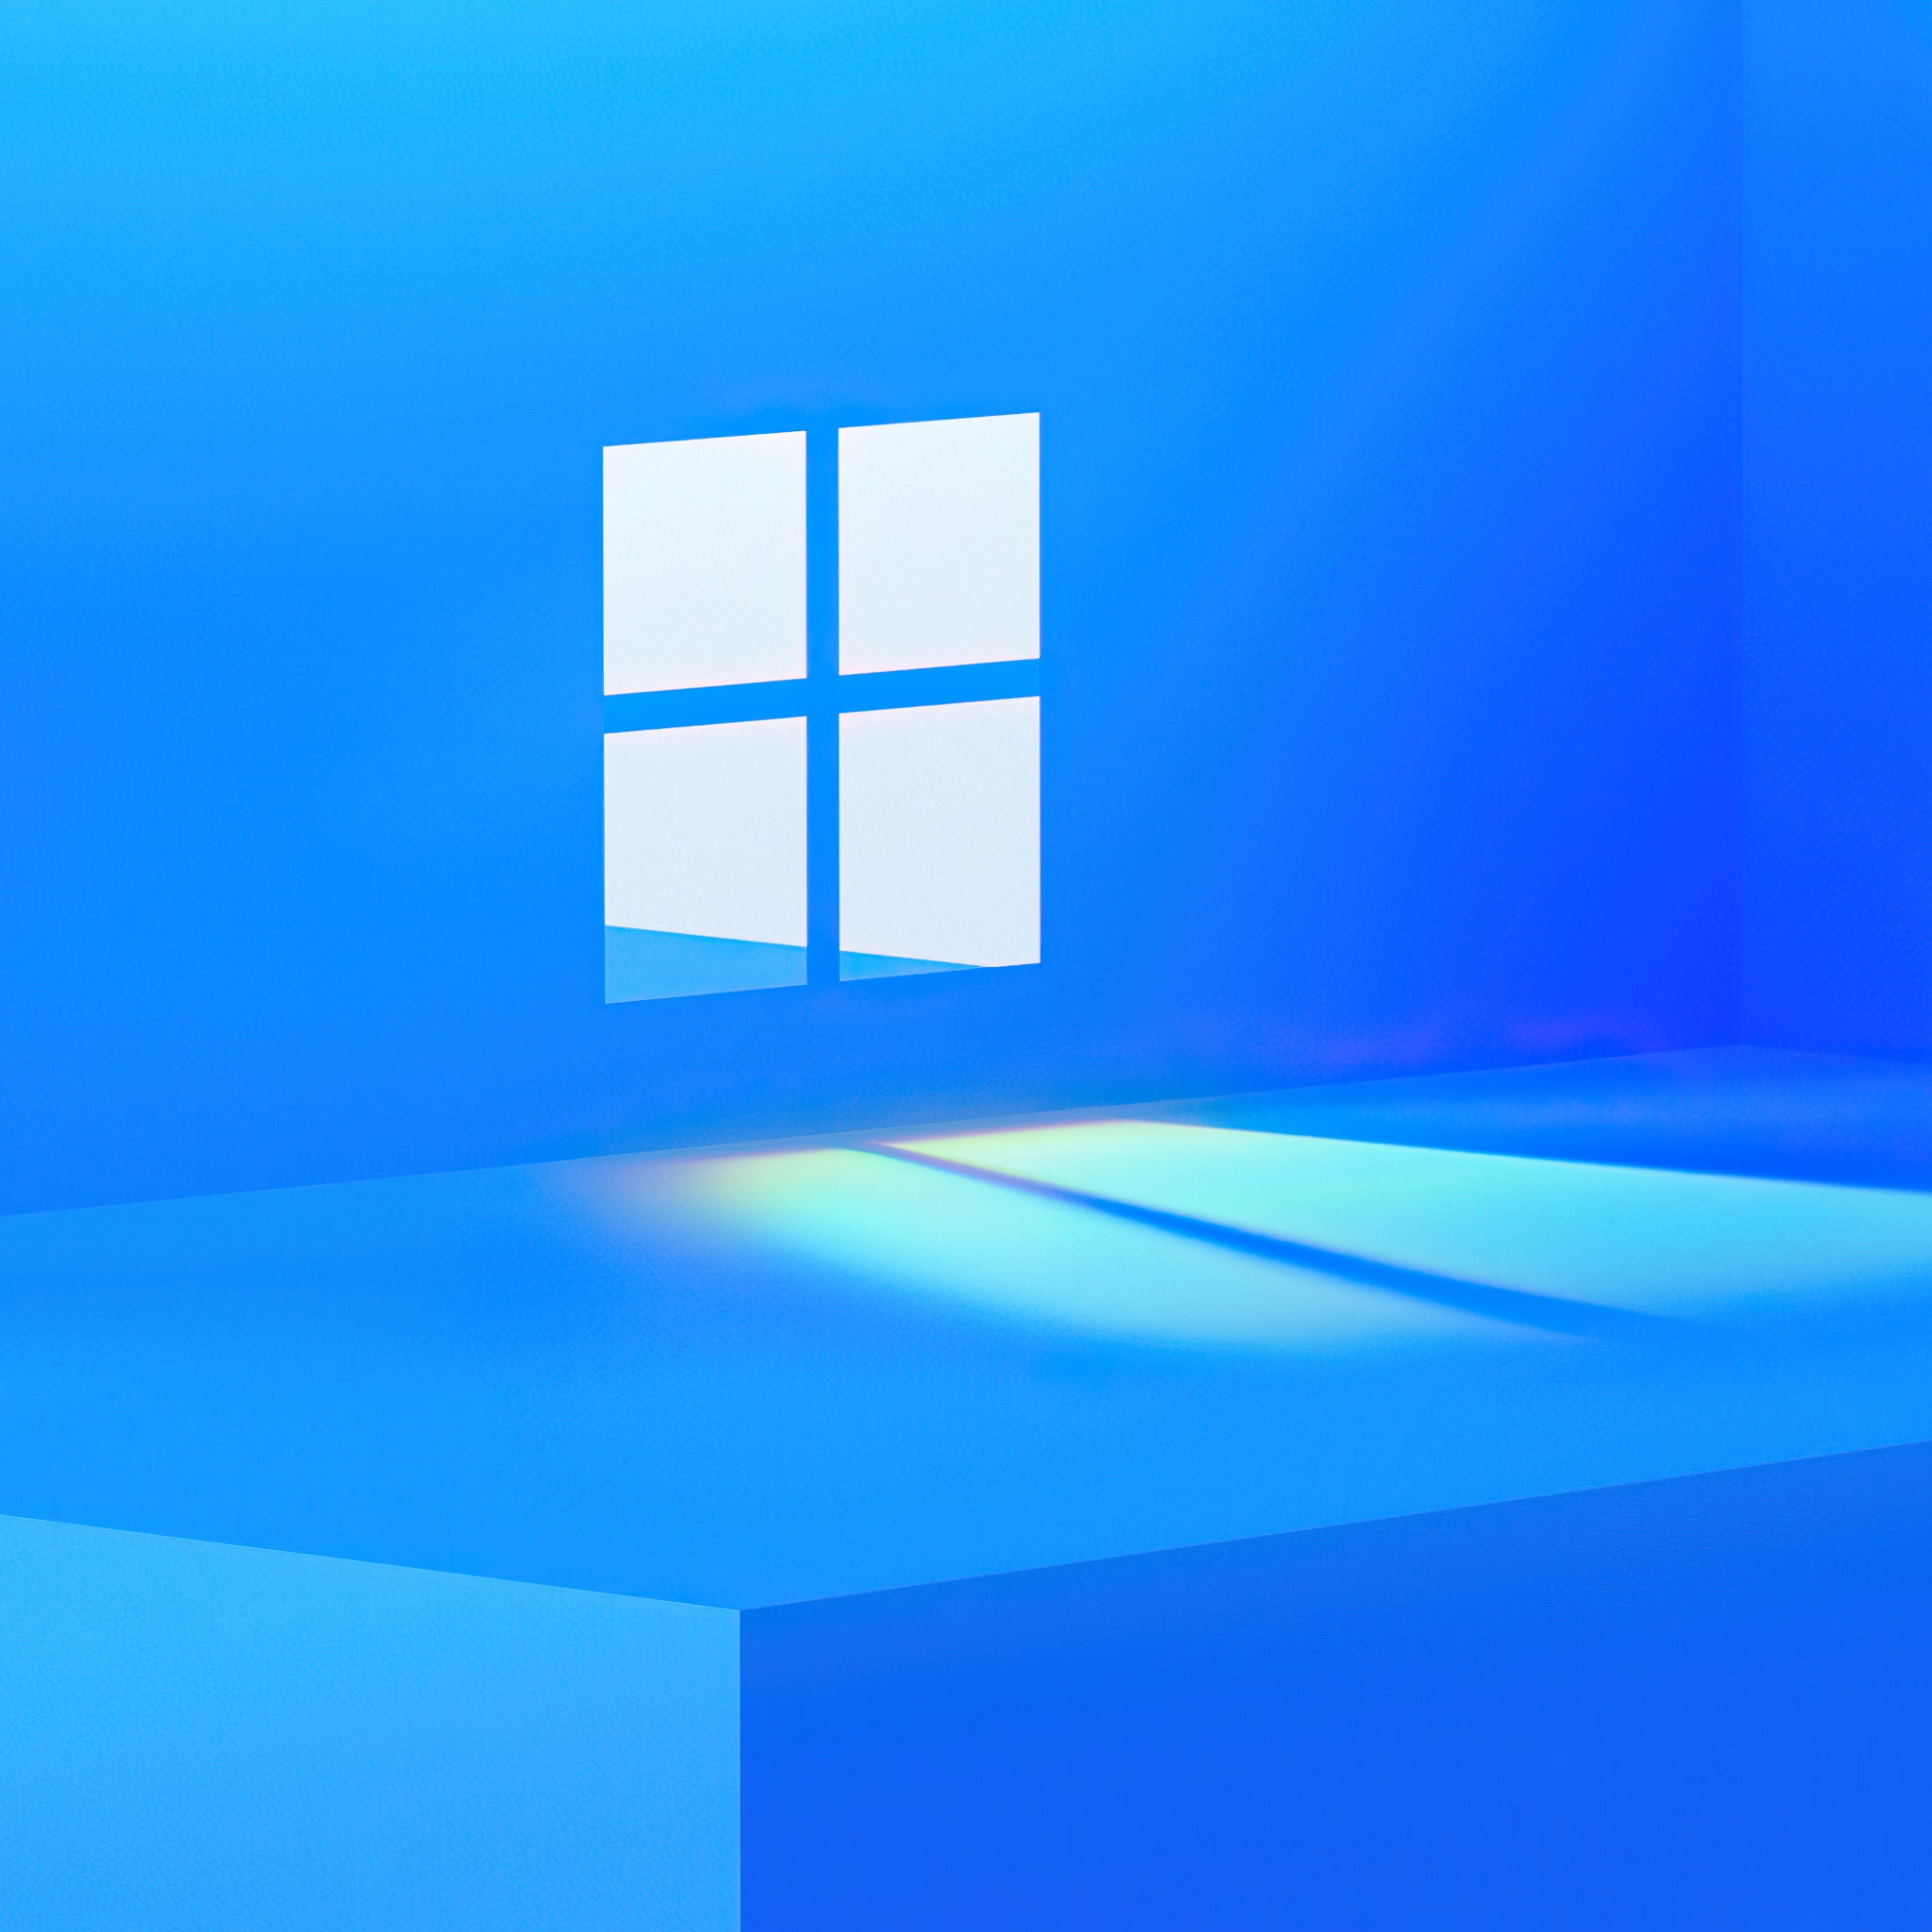 Windows 11 Wallpaper 4K, Stock, Official, Blue background, Windows logo